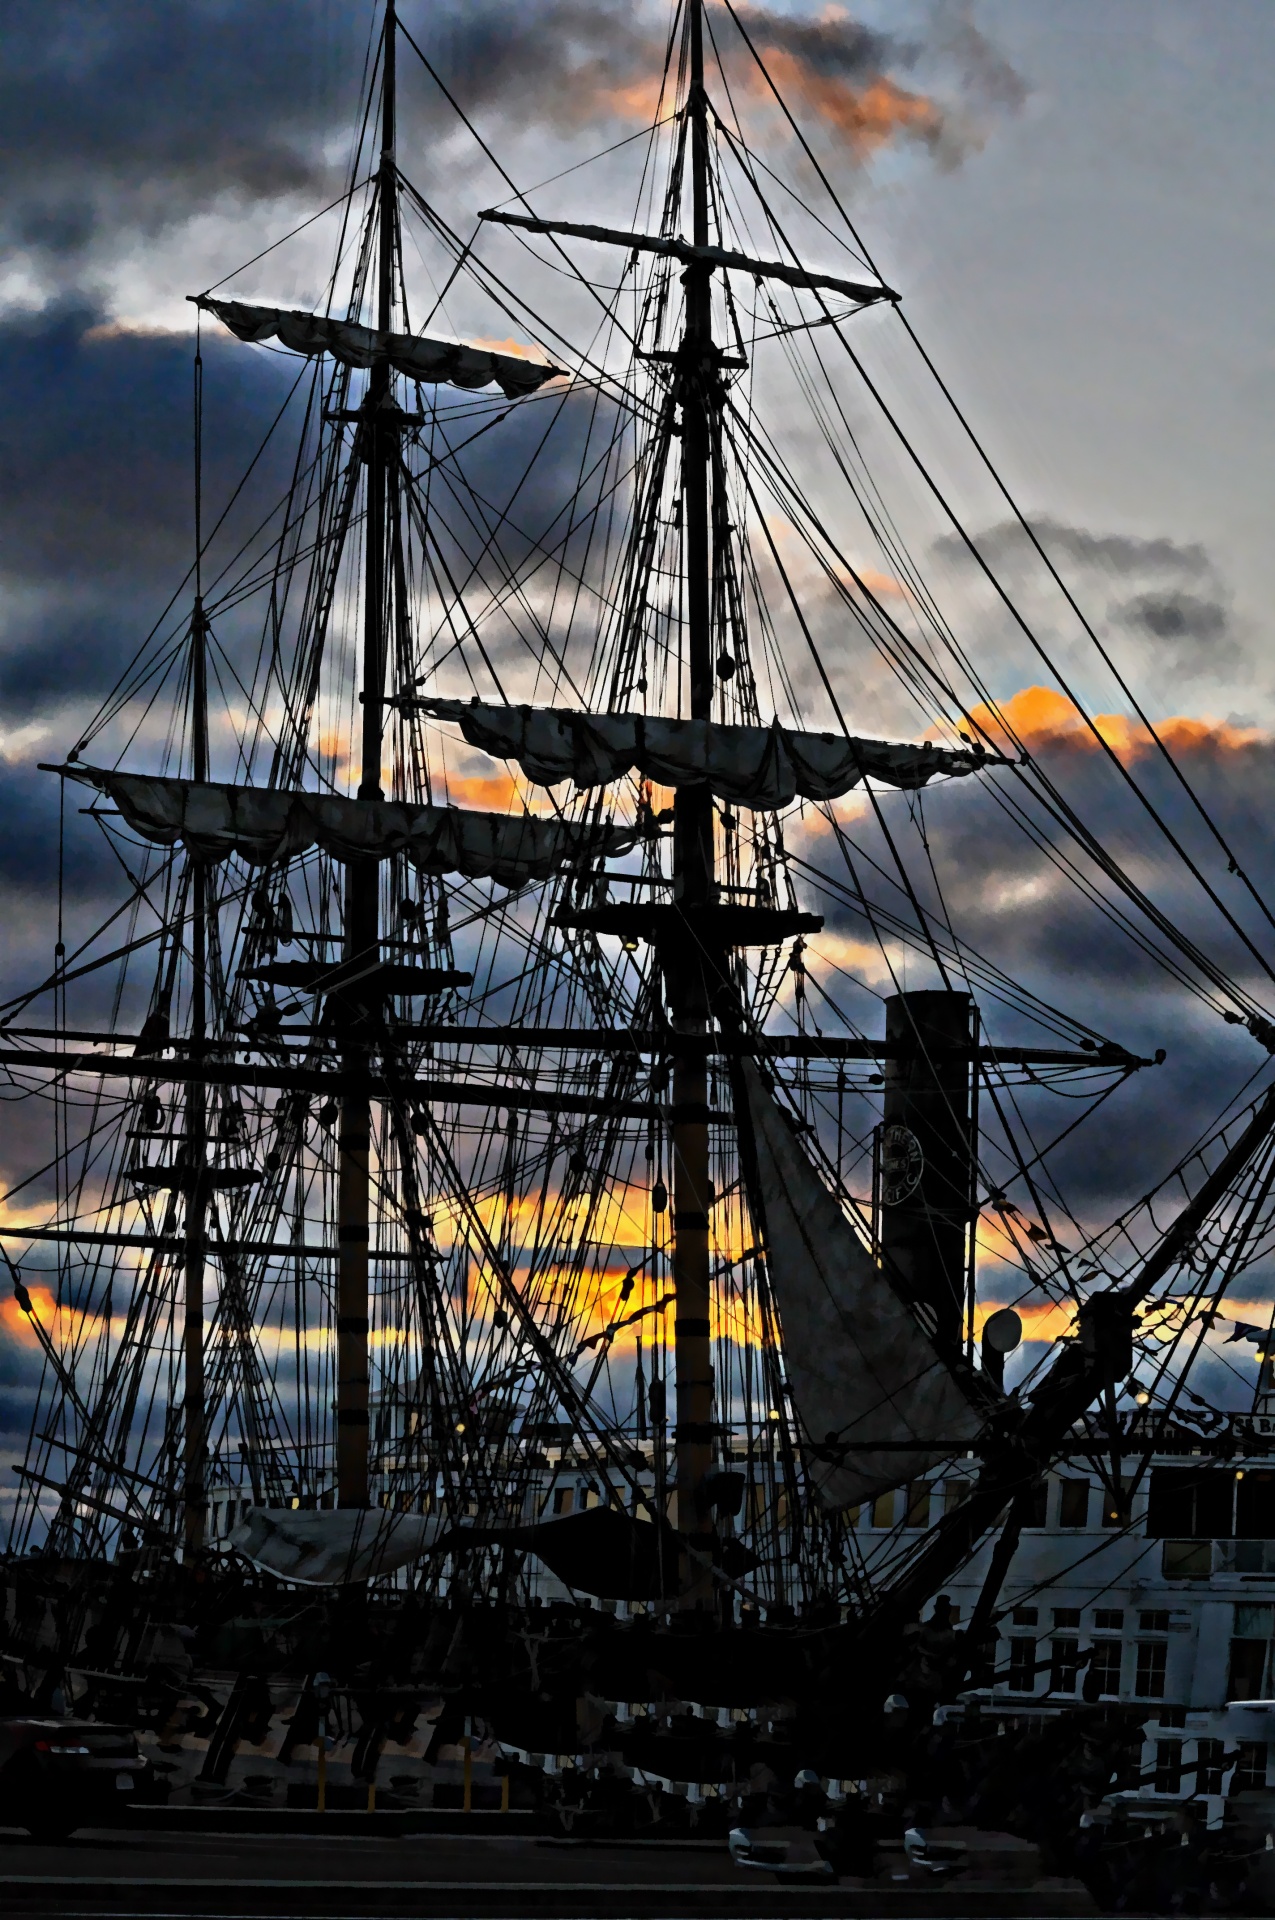 1800 Sailing Ship Silhouette